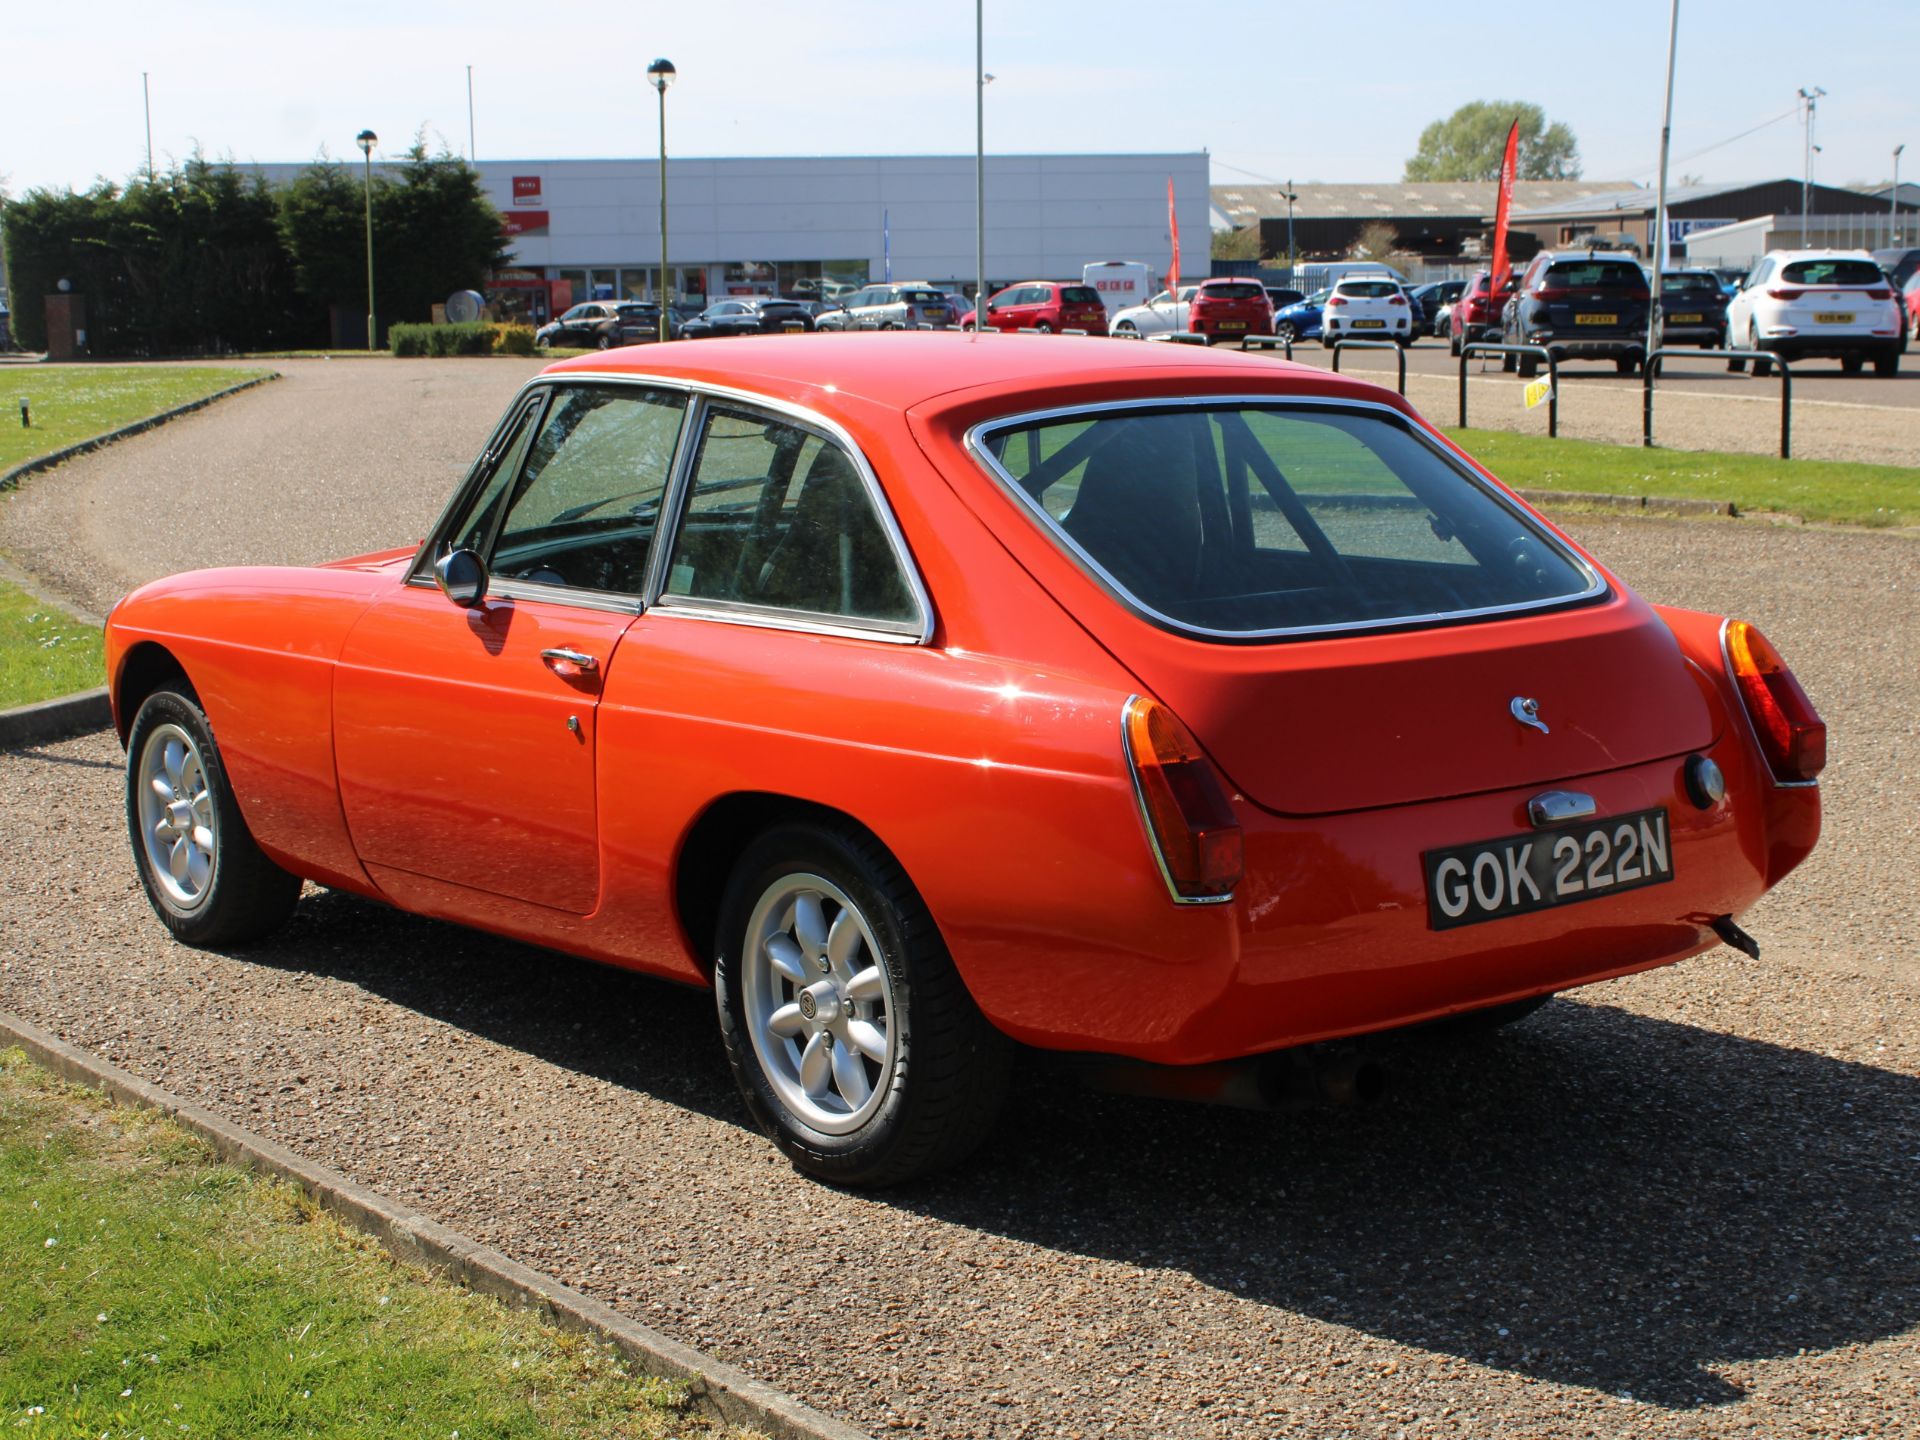 1975 MG B GT - Image 21 of 23